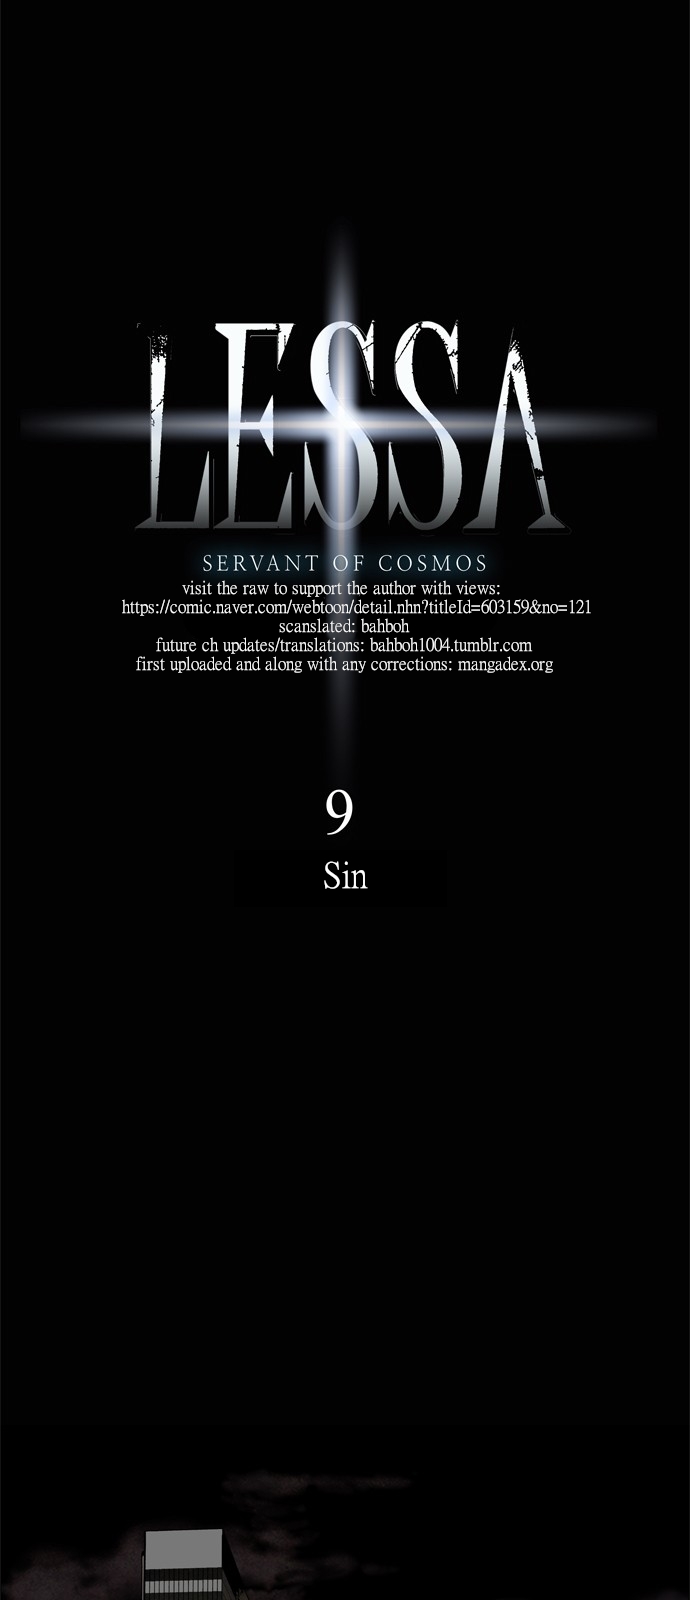 LESSA Servant of Cosmos Ch. 9 Sin <1>